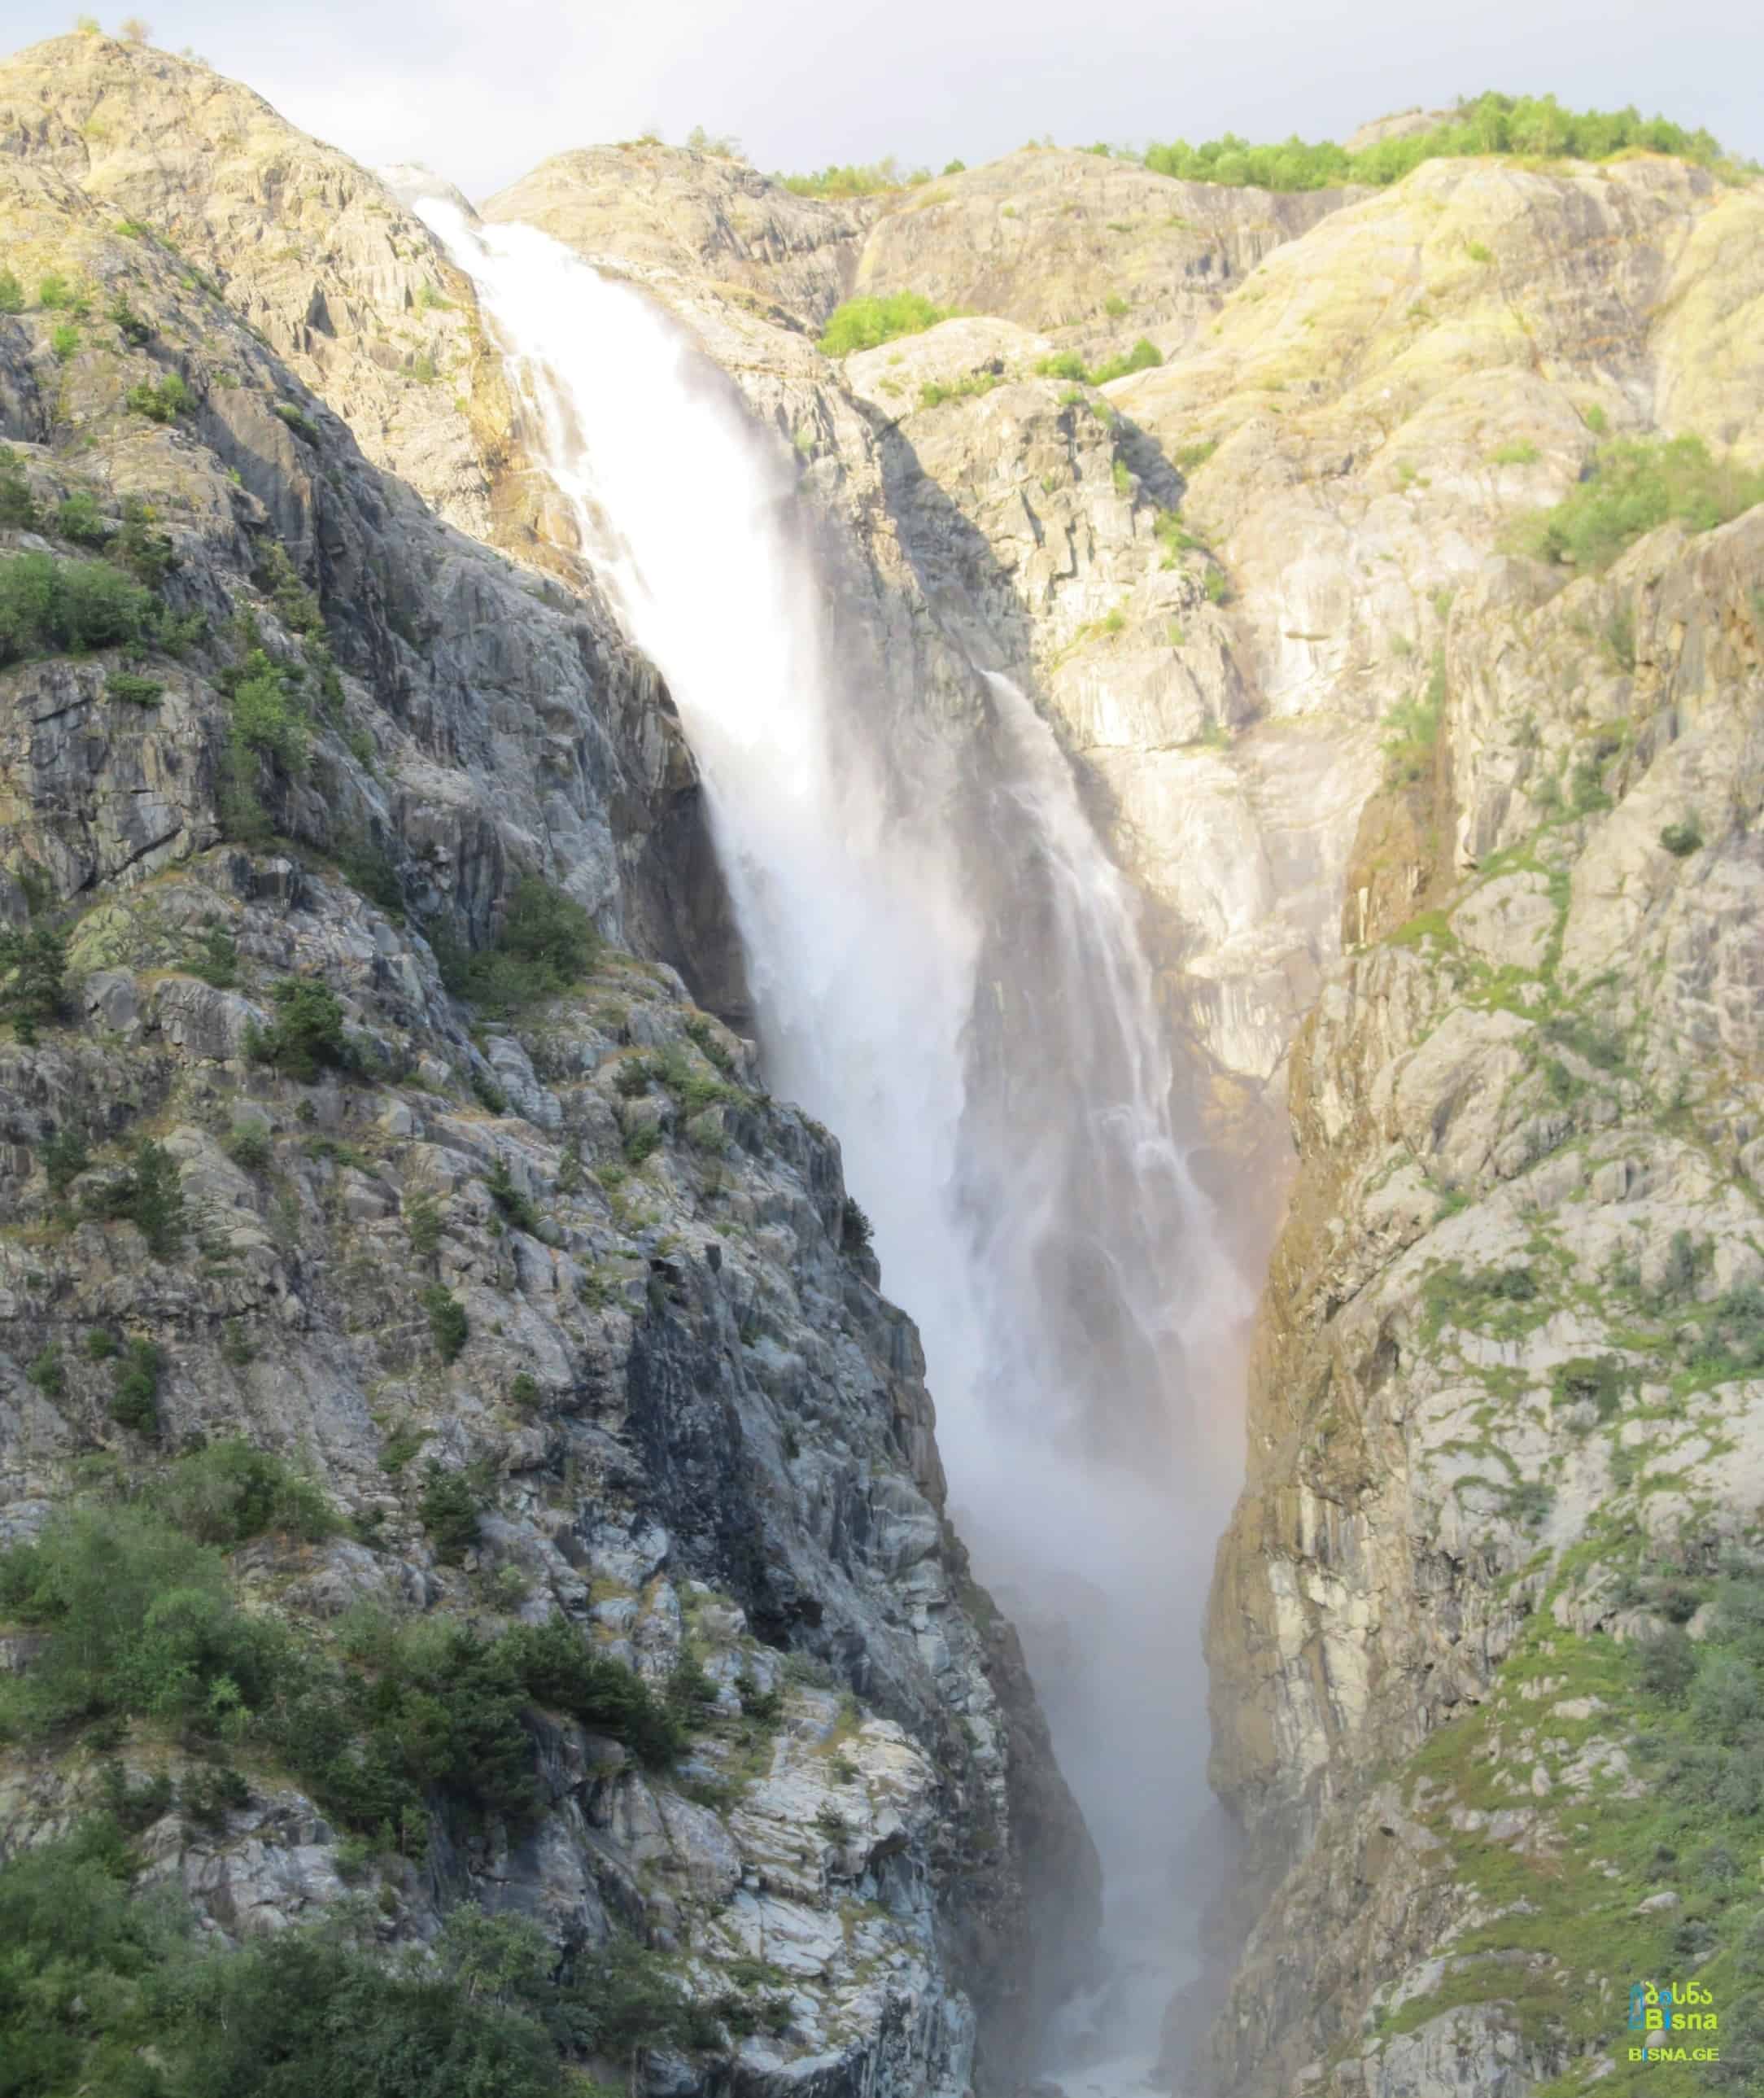 Shdygra Waterfall